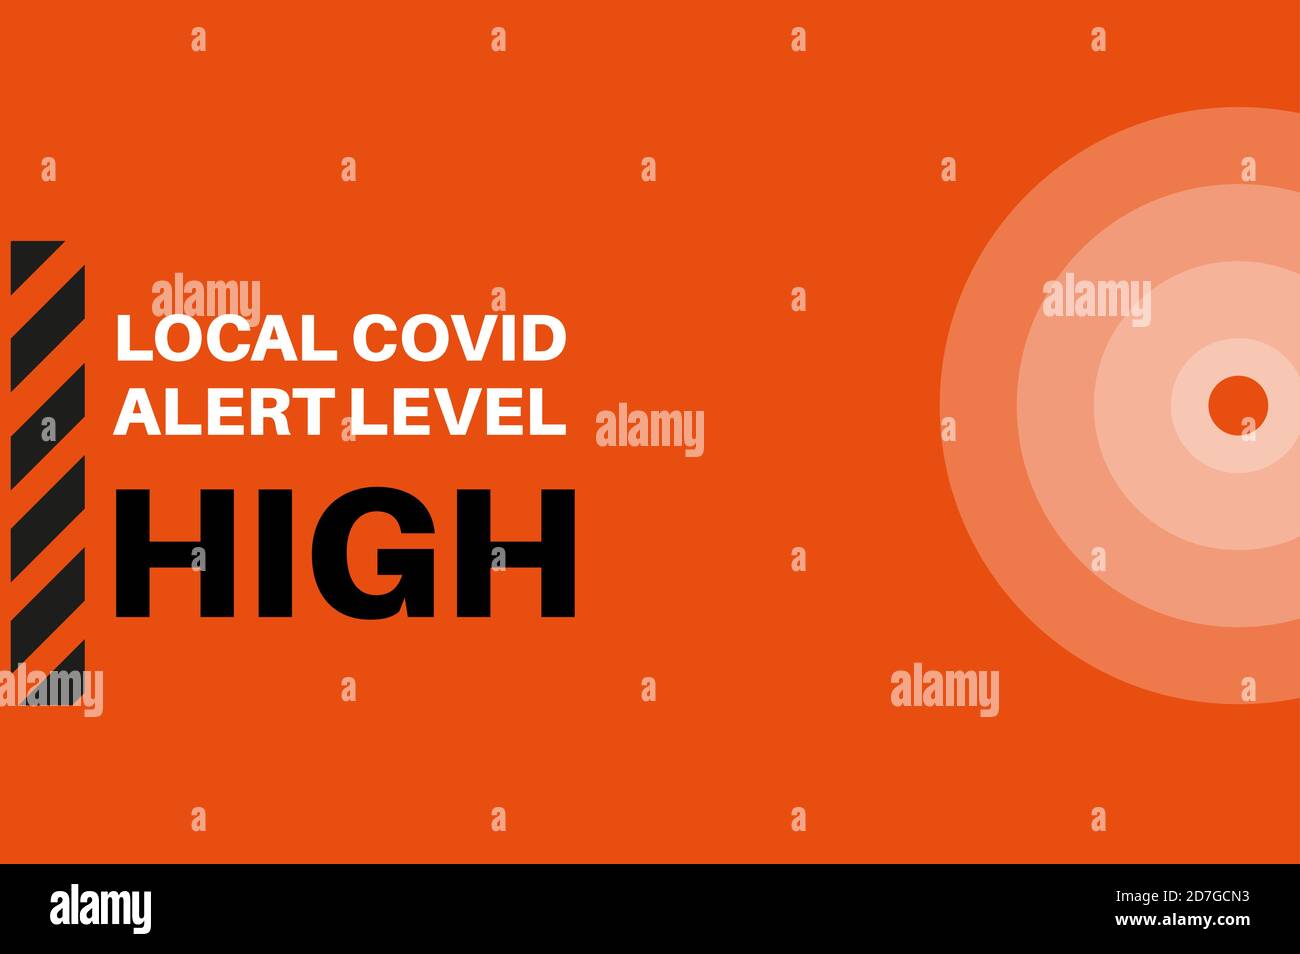 High Local Covid Alert Level (Tier 2) Vector Illustration Stock Vector